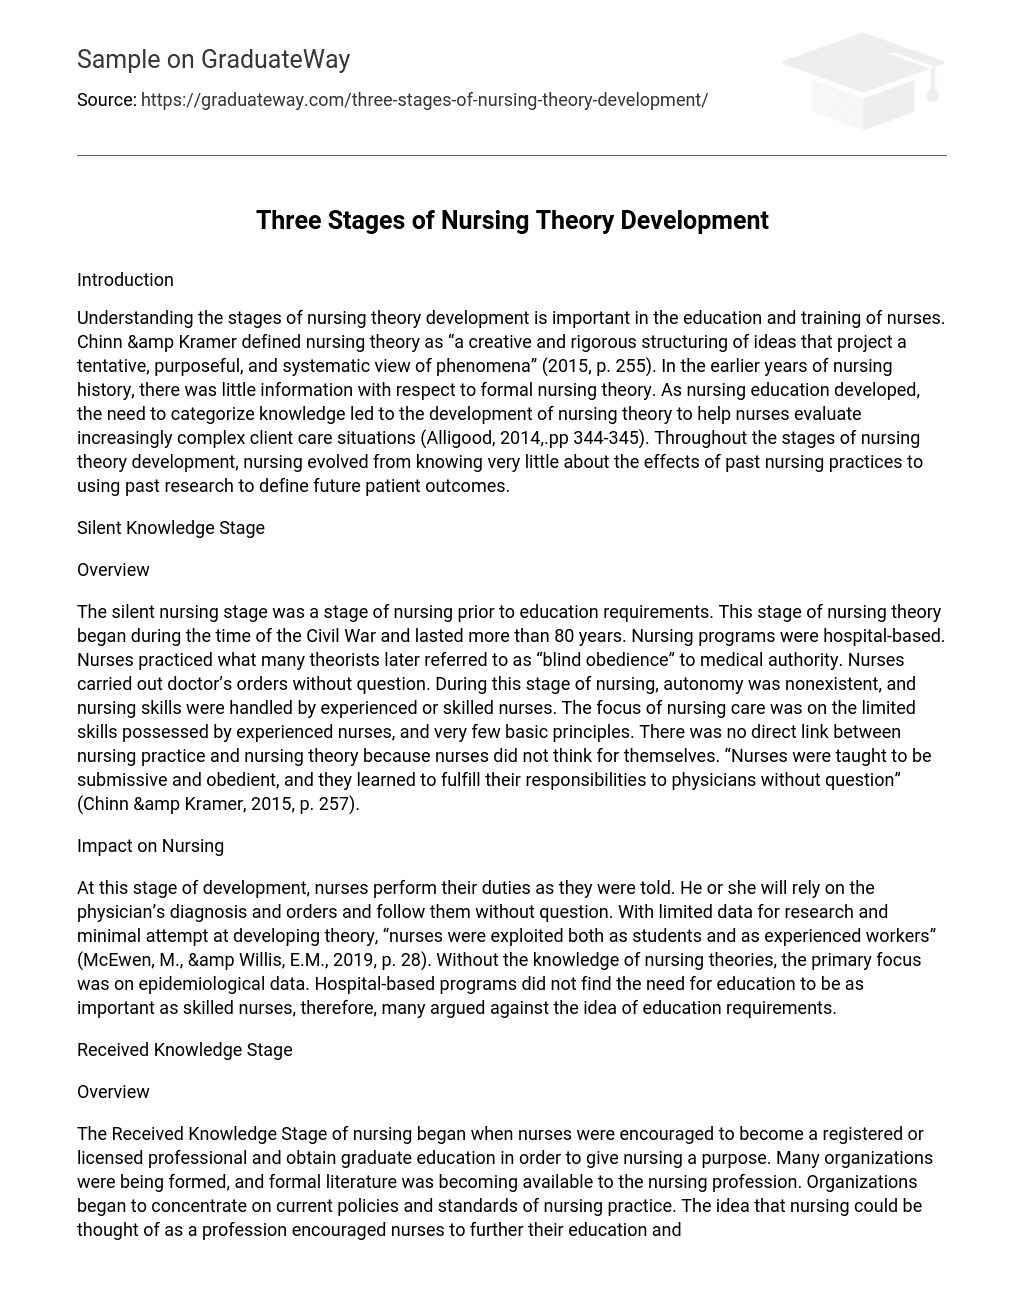 Three Stages of Nursing Theory Development